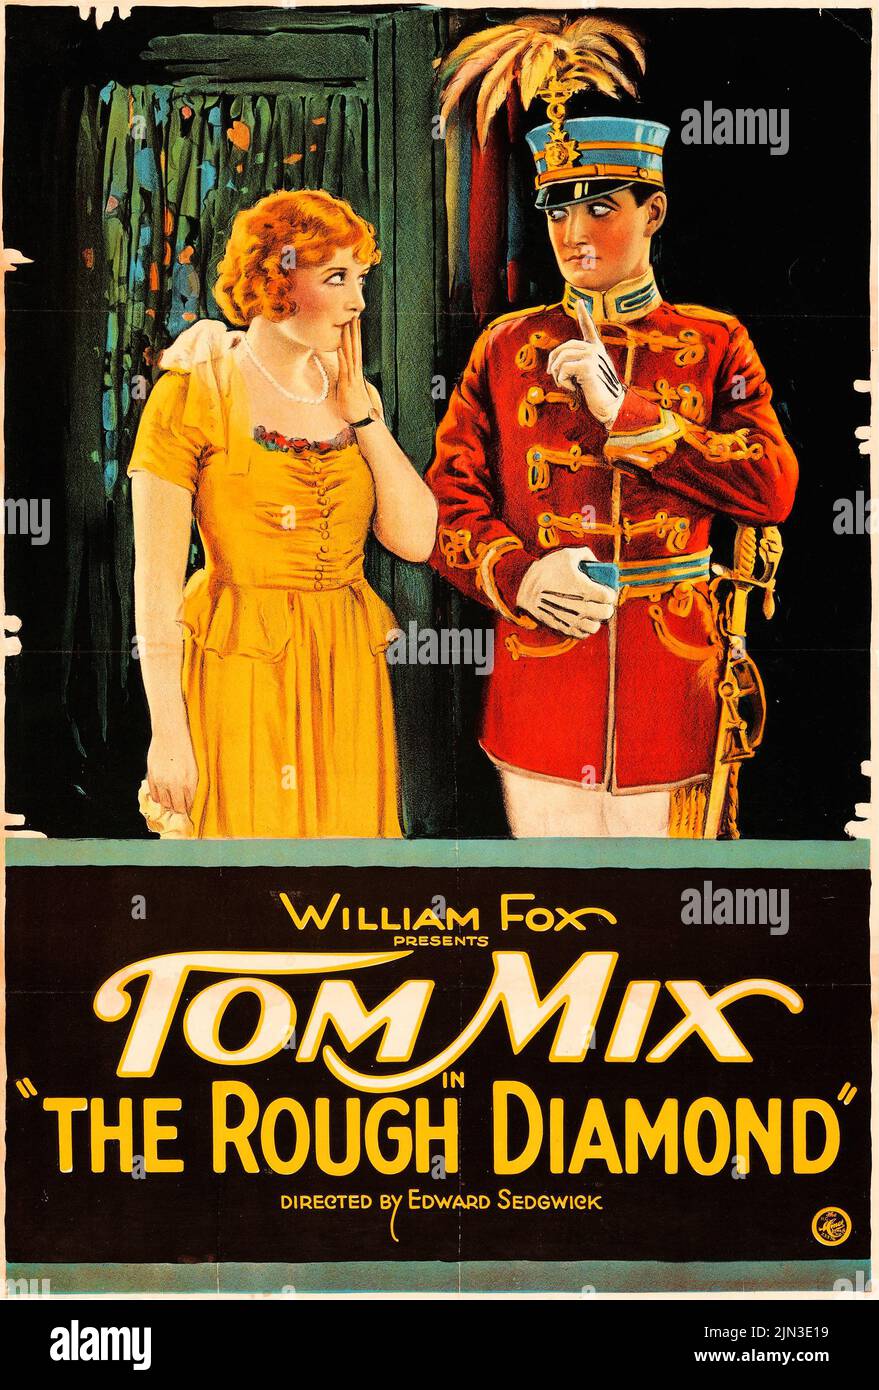 Vintage movie poster - Tom Mix - The Rough Diamond (Fox, 1921) Stock Photo